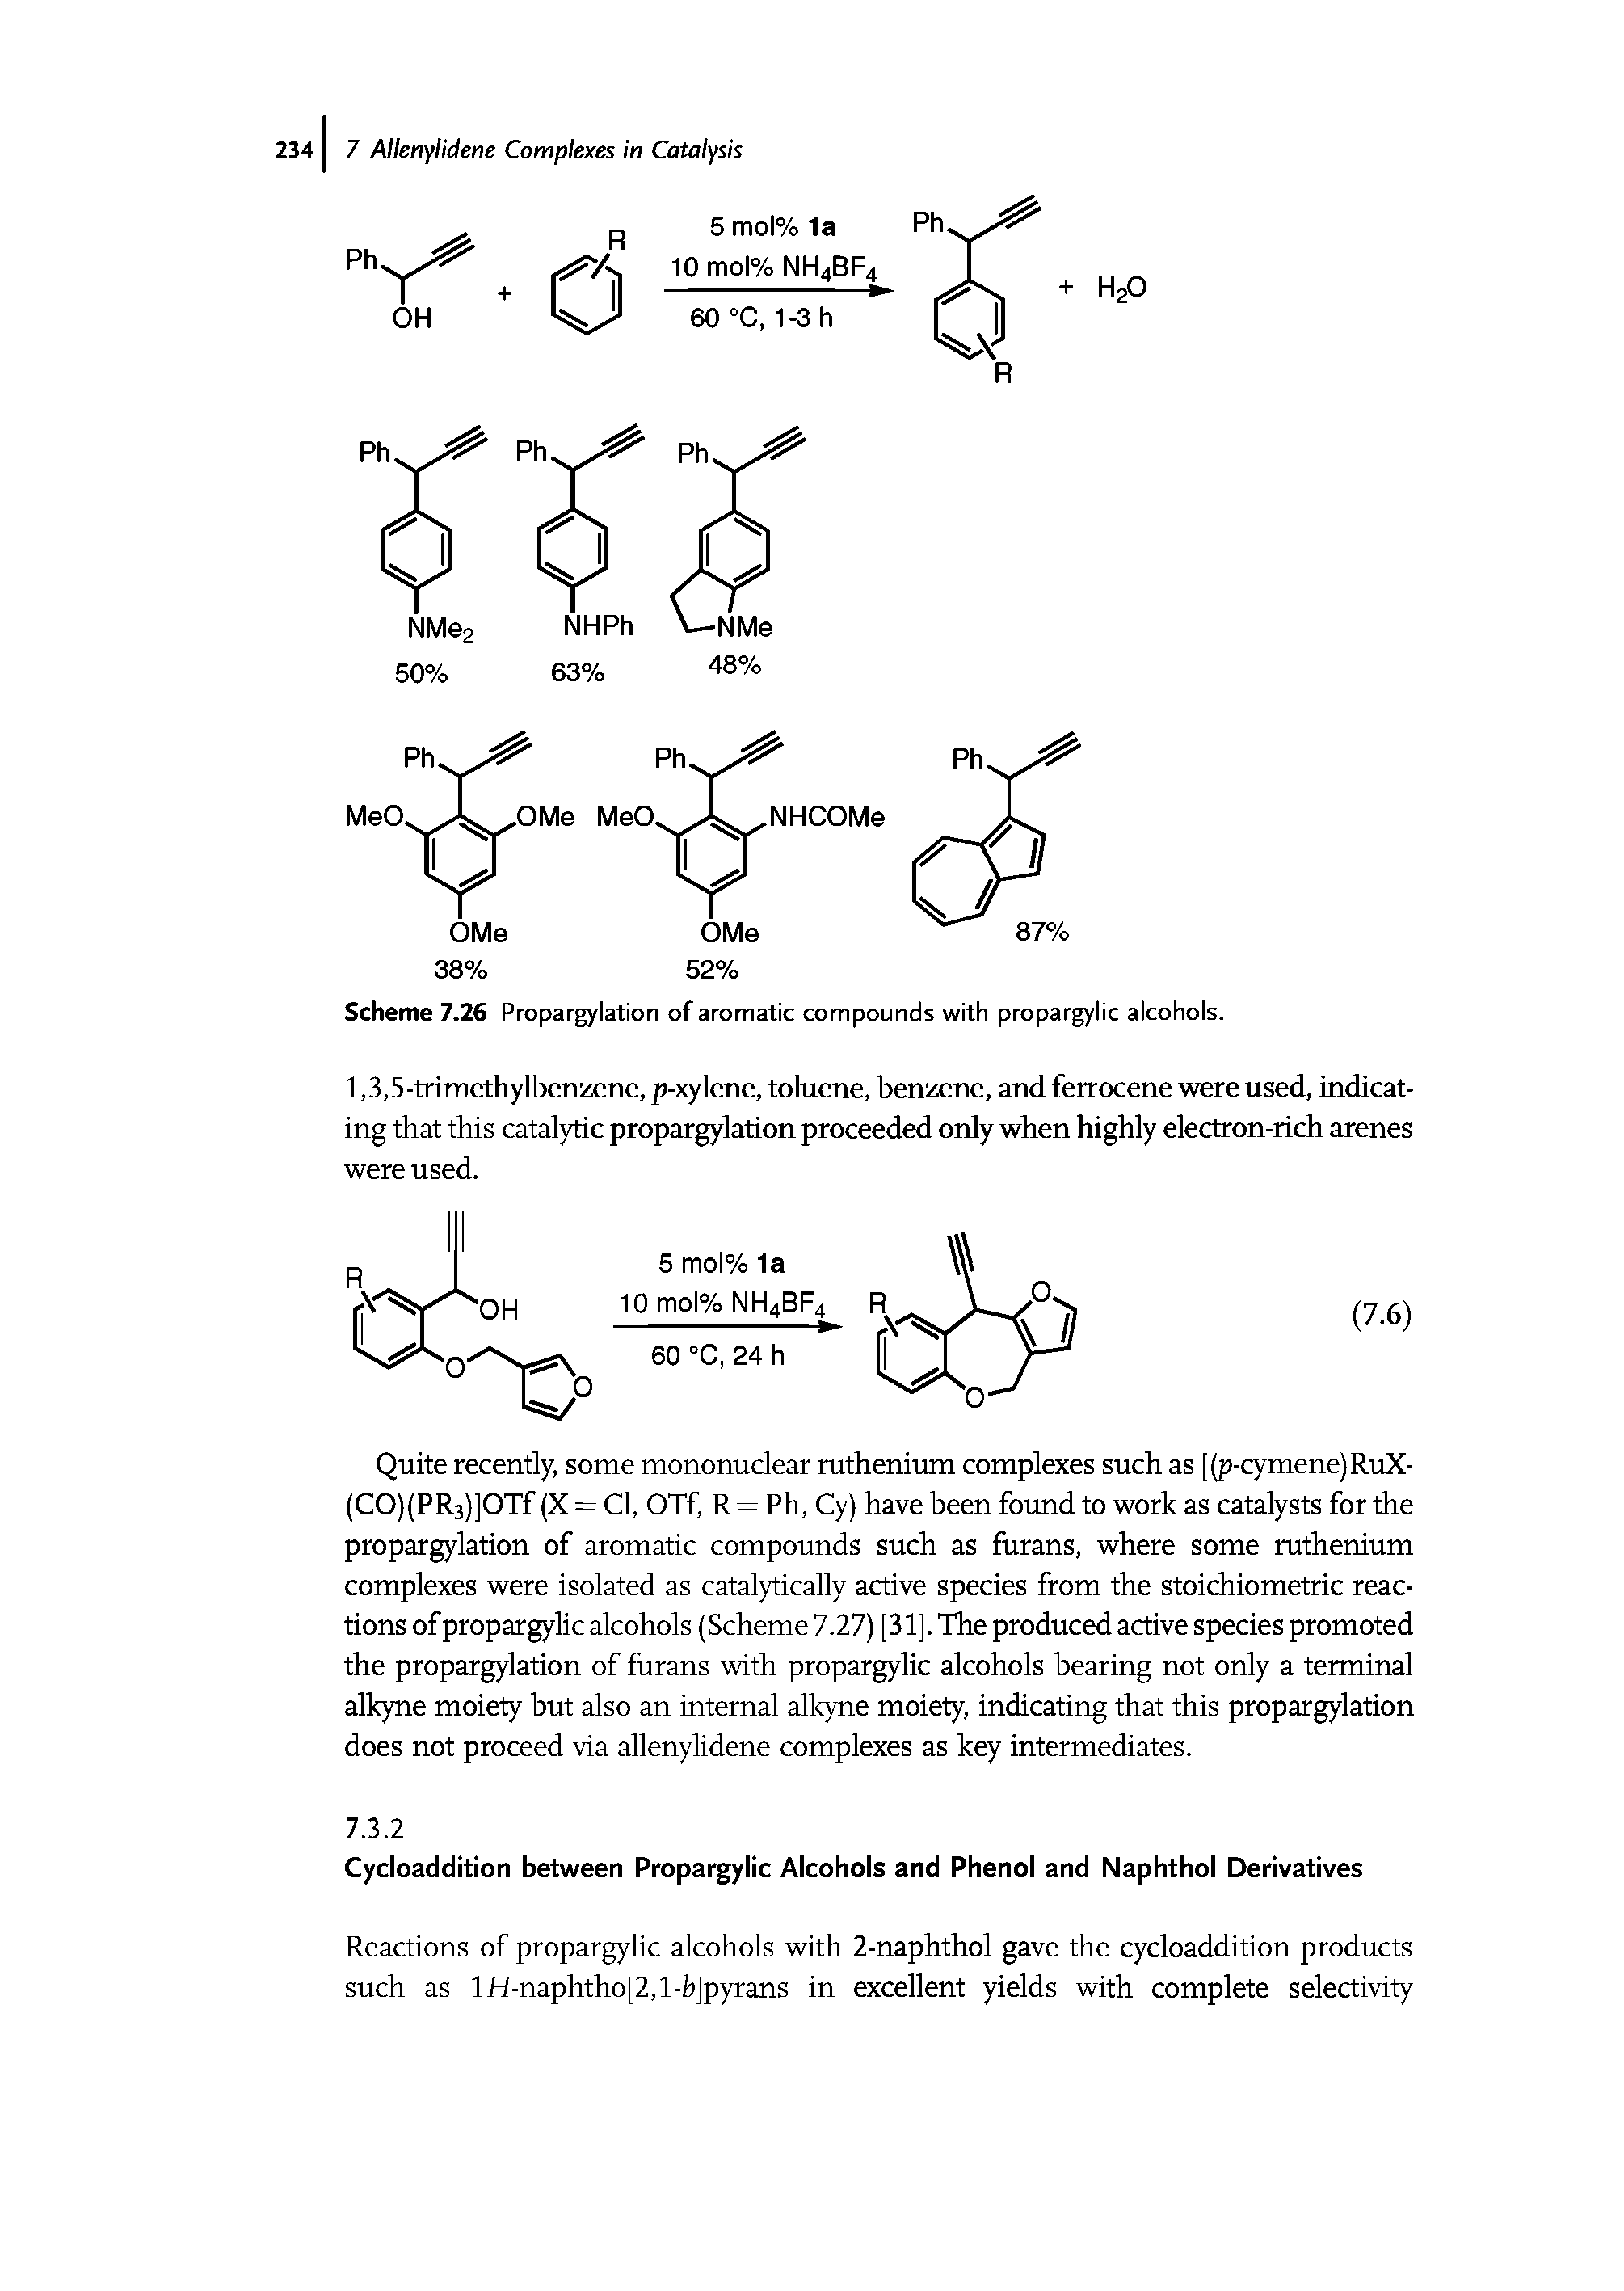 Scheme 7.26 Propargylation of aromatic compounds with propargylic alcohols.